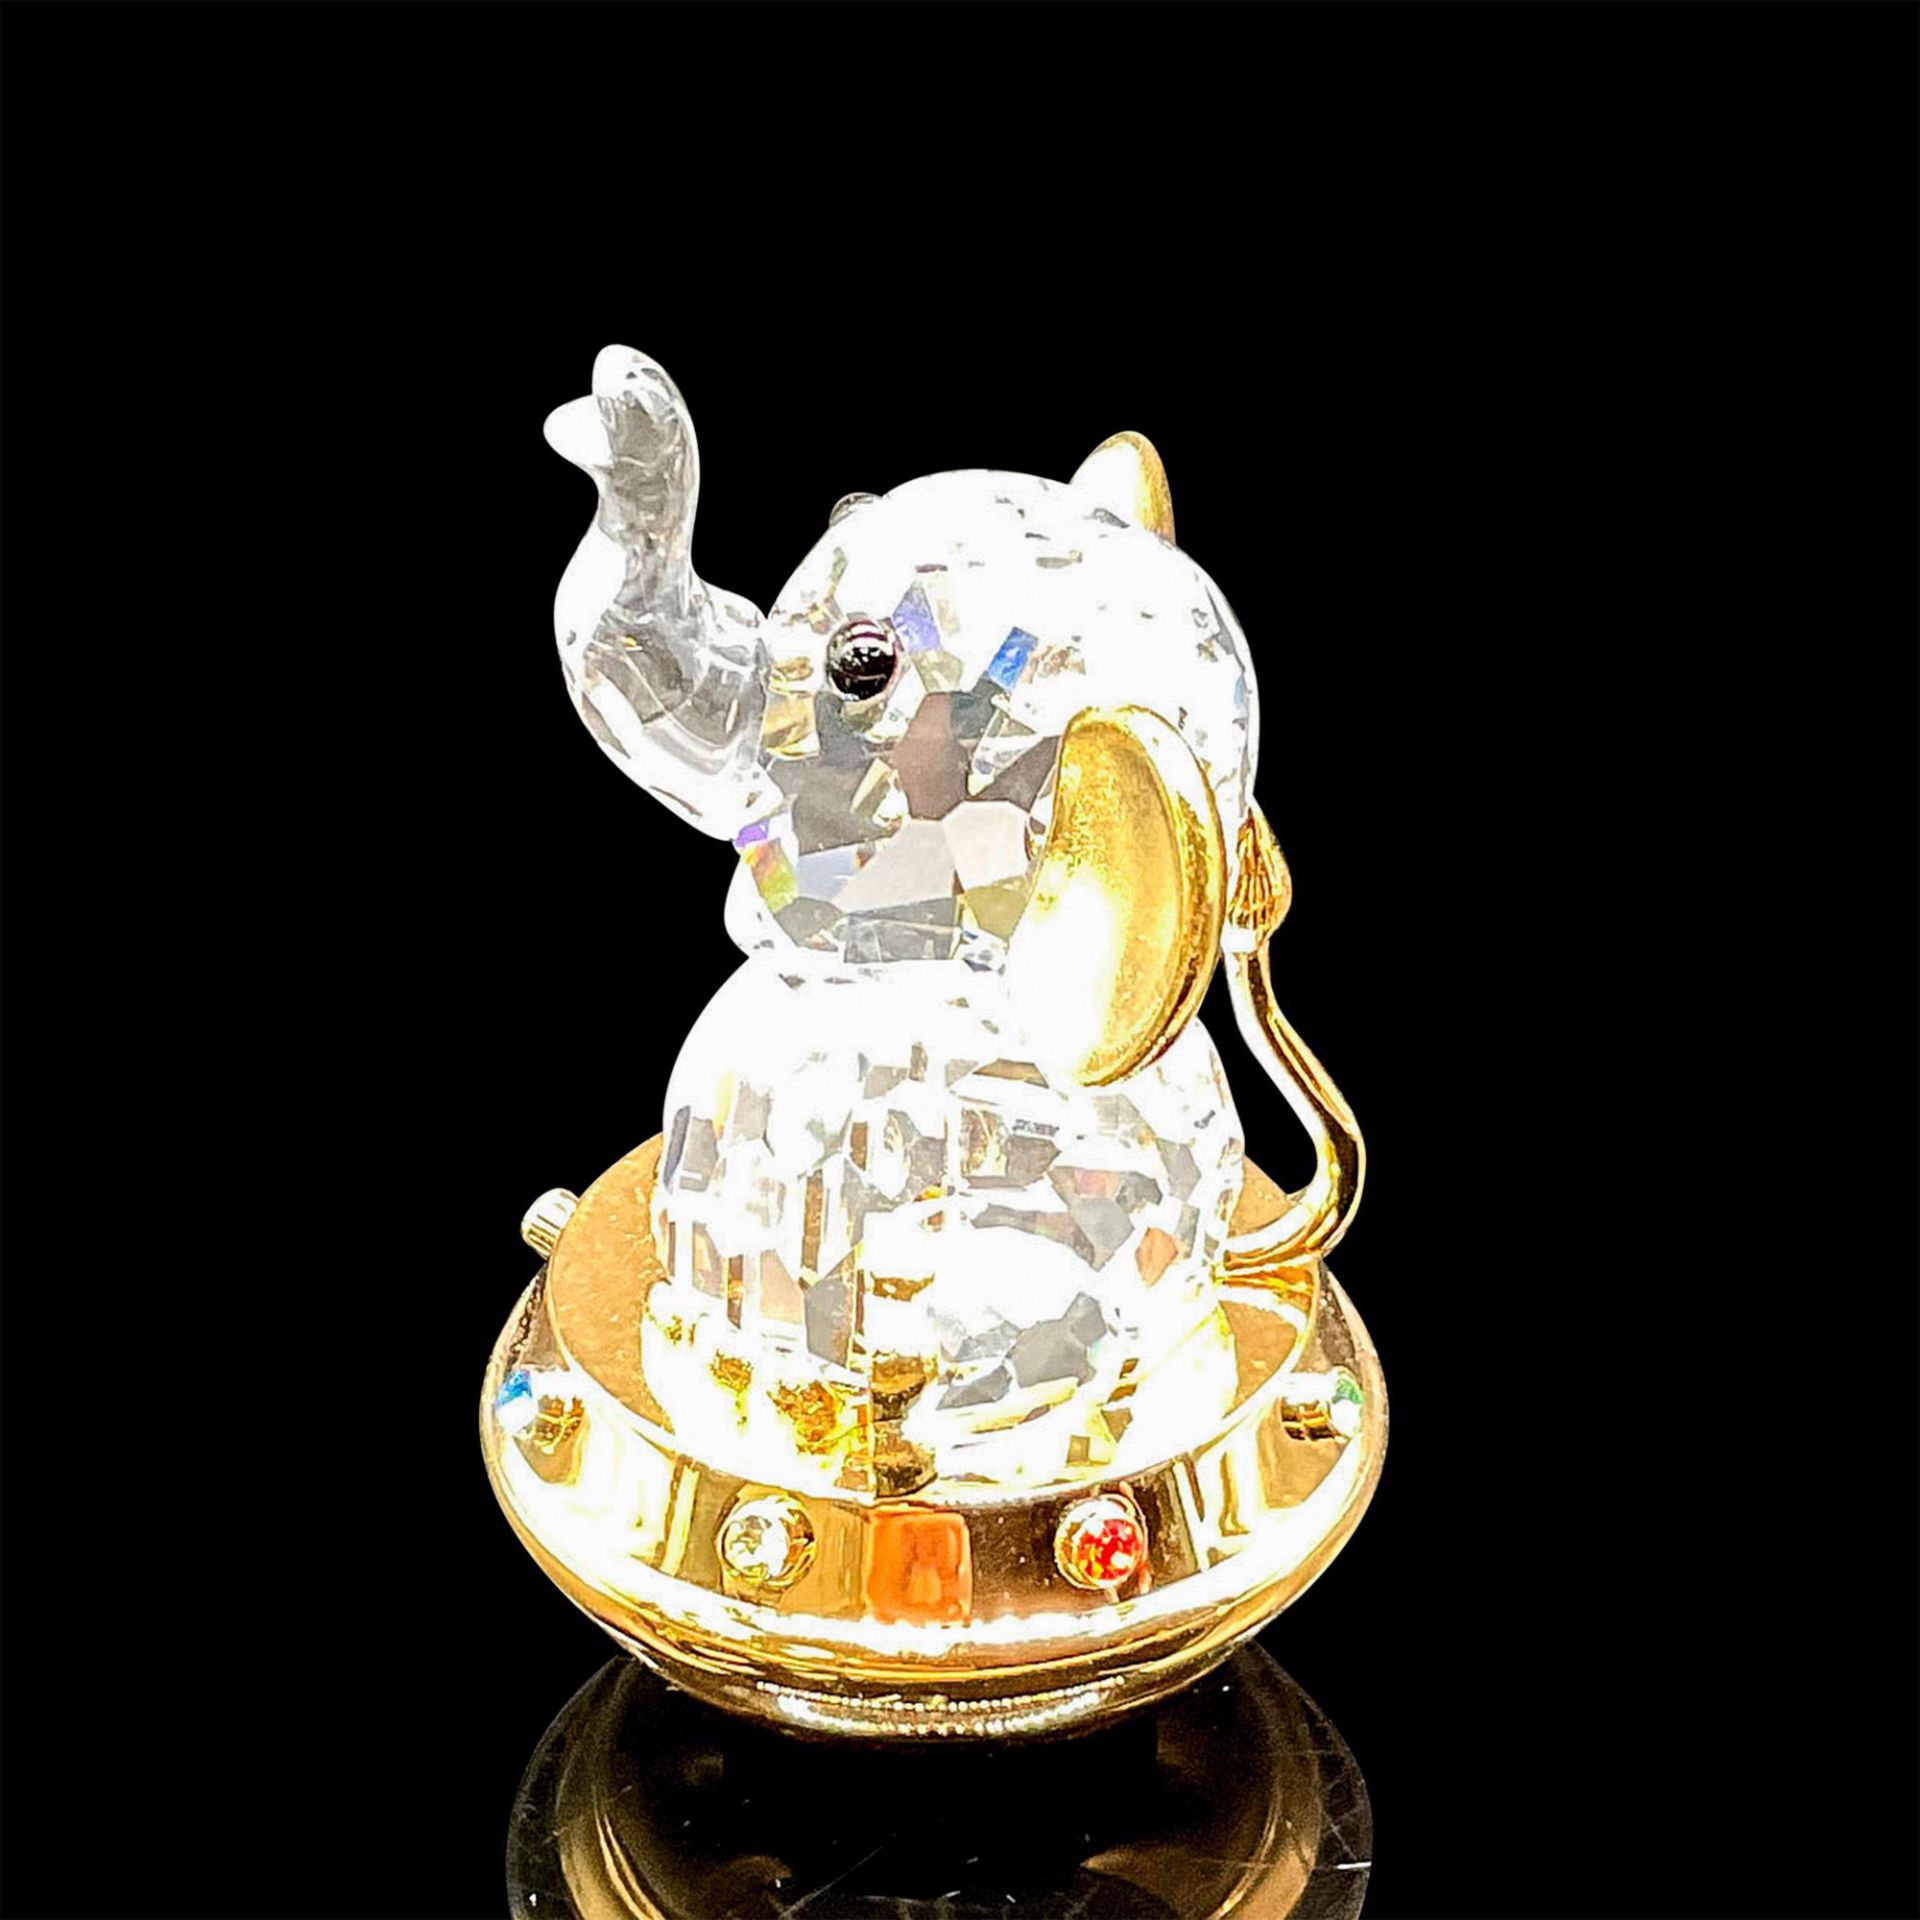 Swarovski Crystal Memories, Classics Toy Elephant - Image 2 of 4